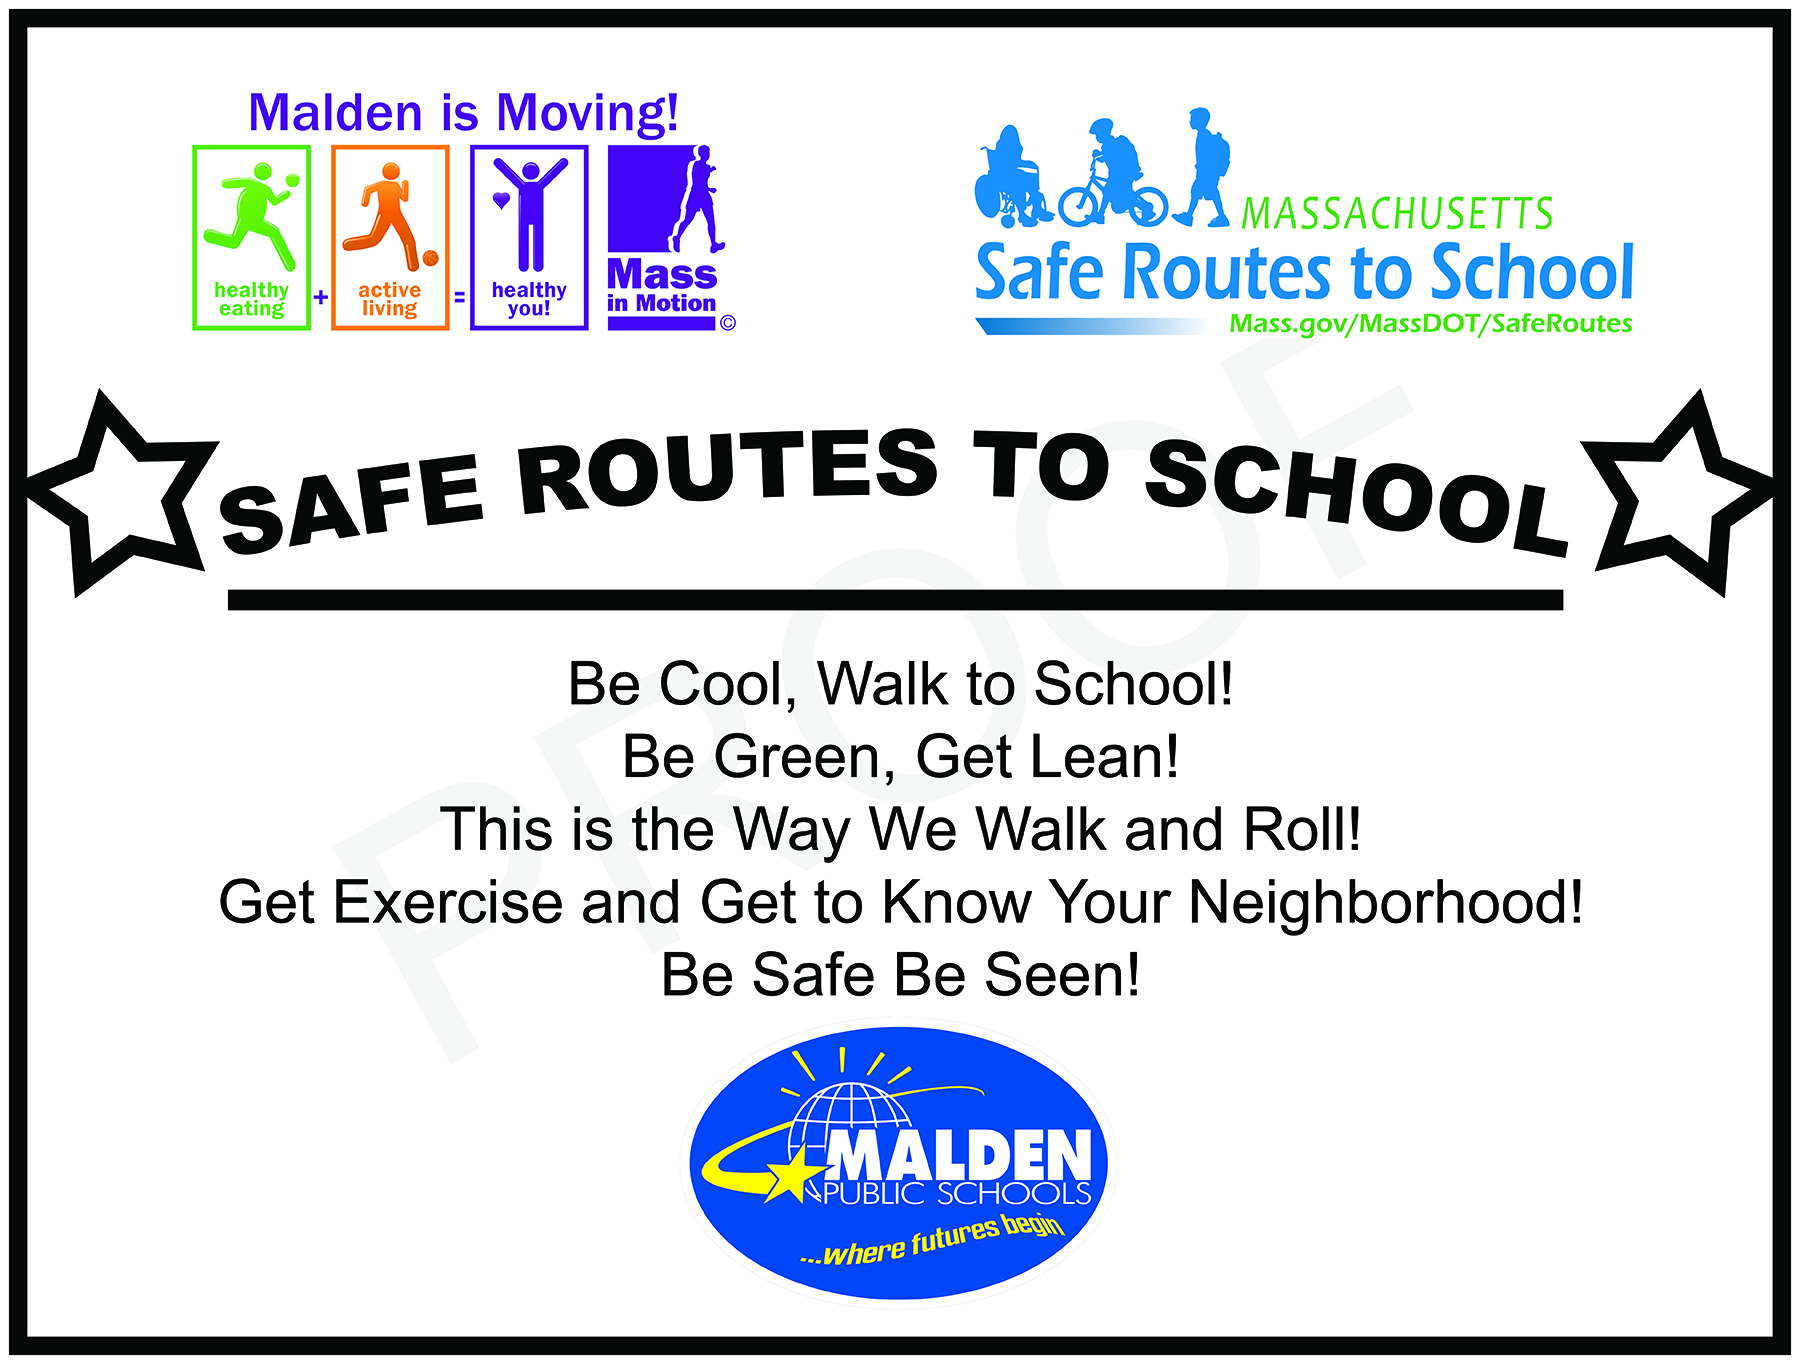 Safe Routes to School Malden logo